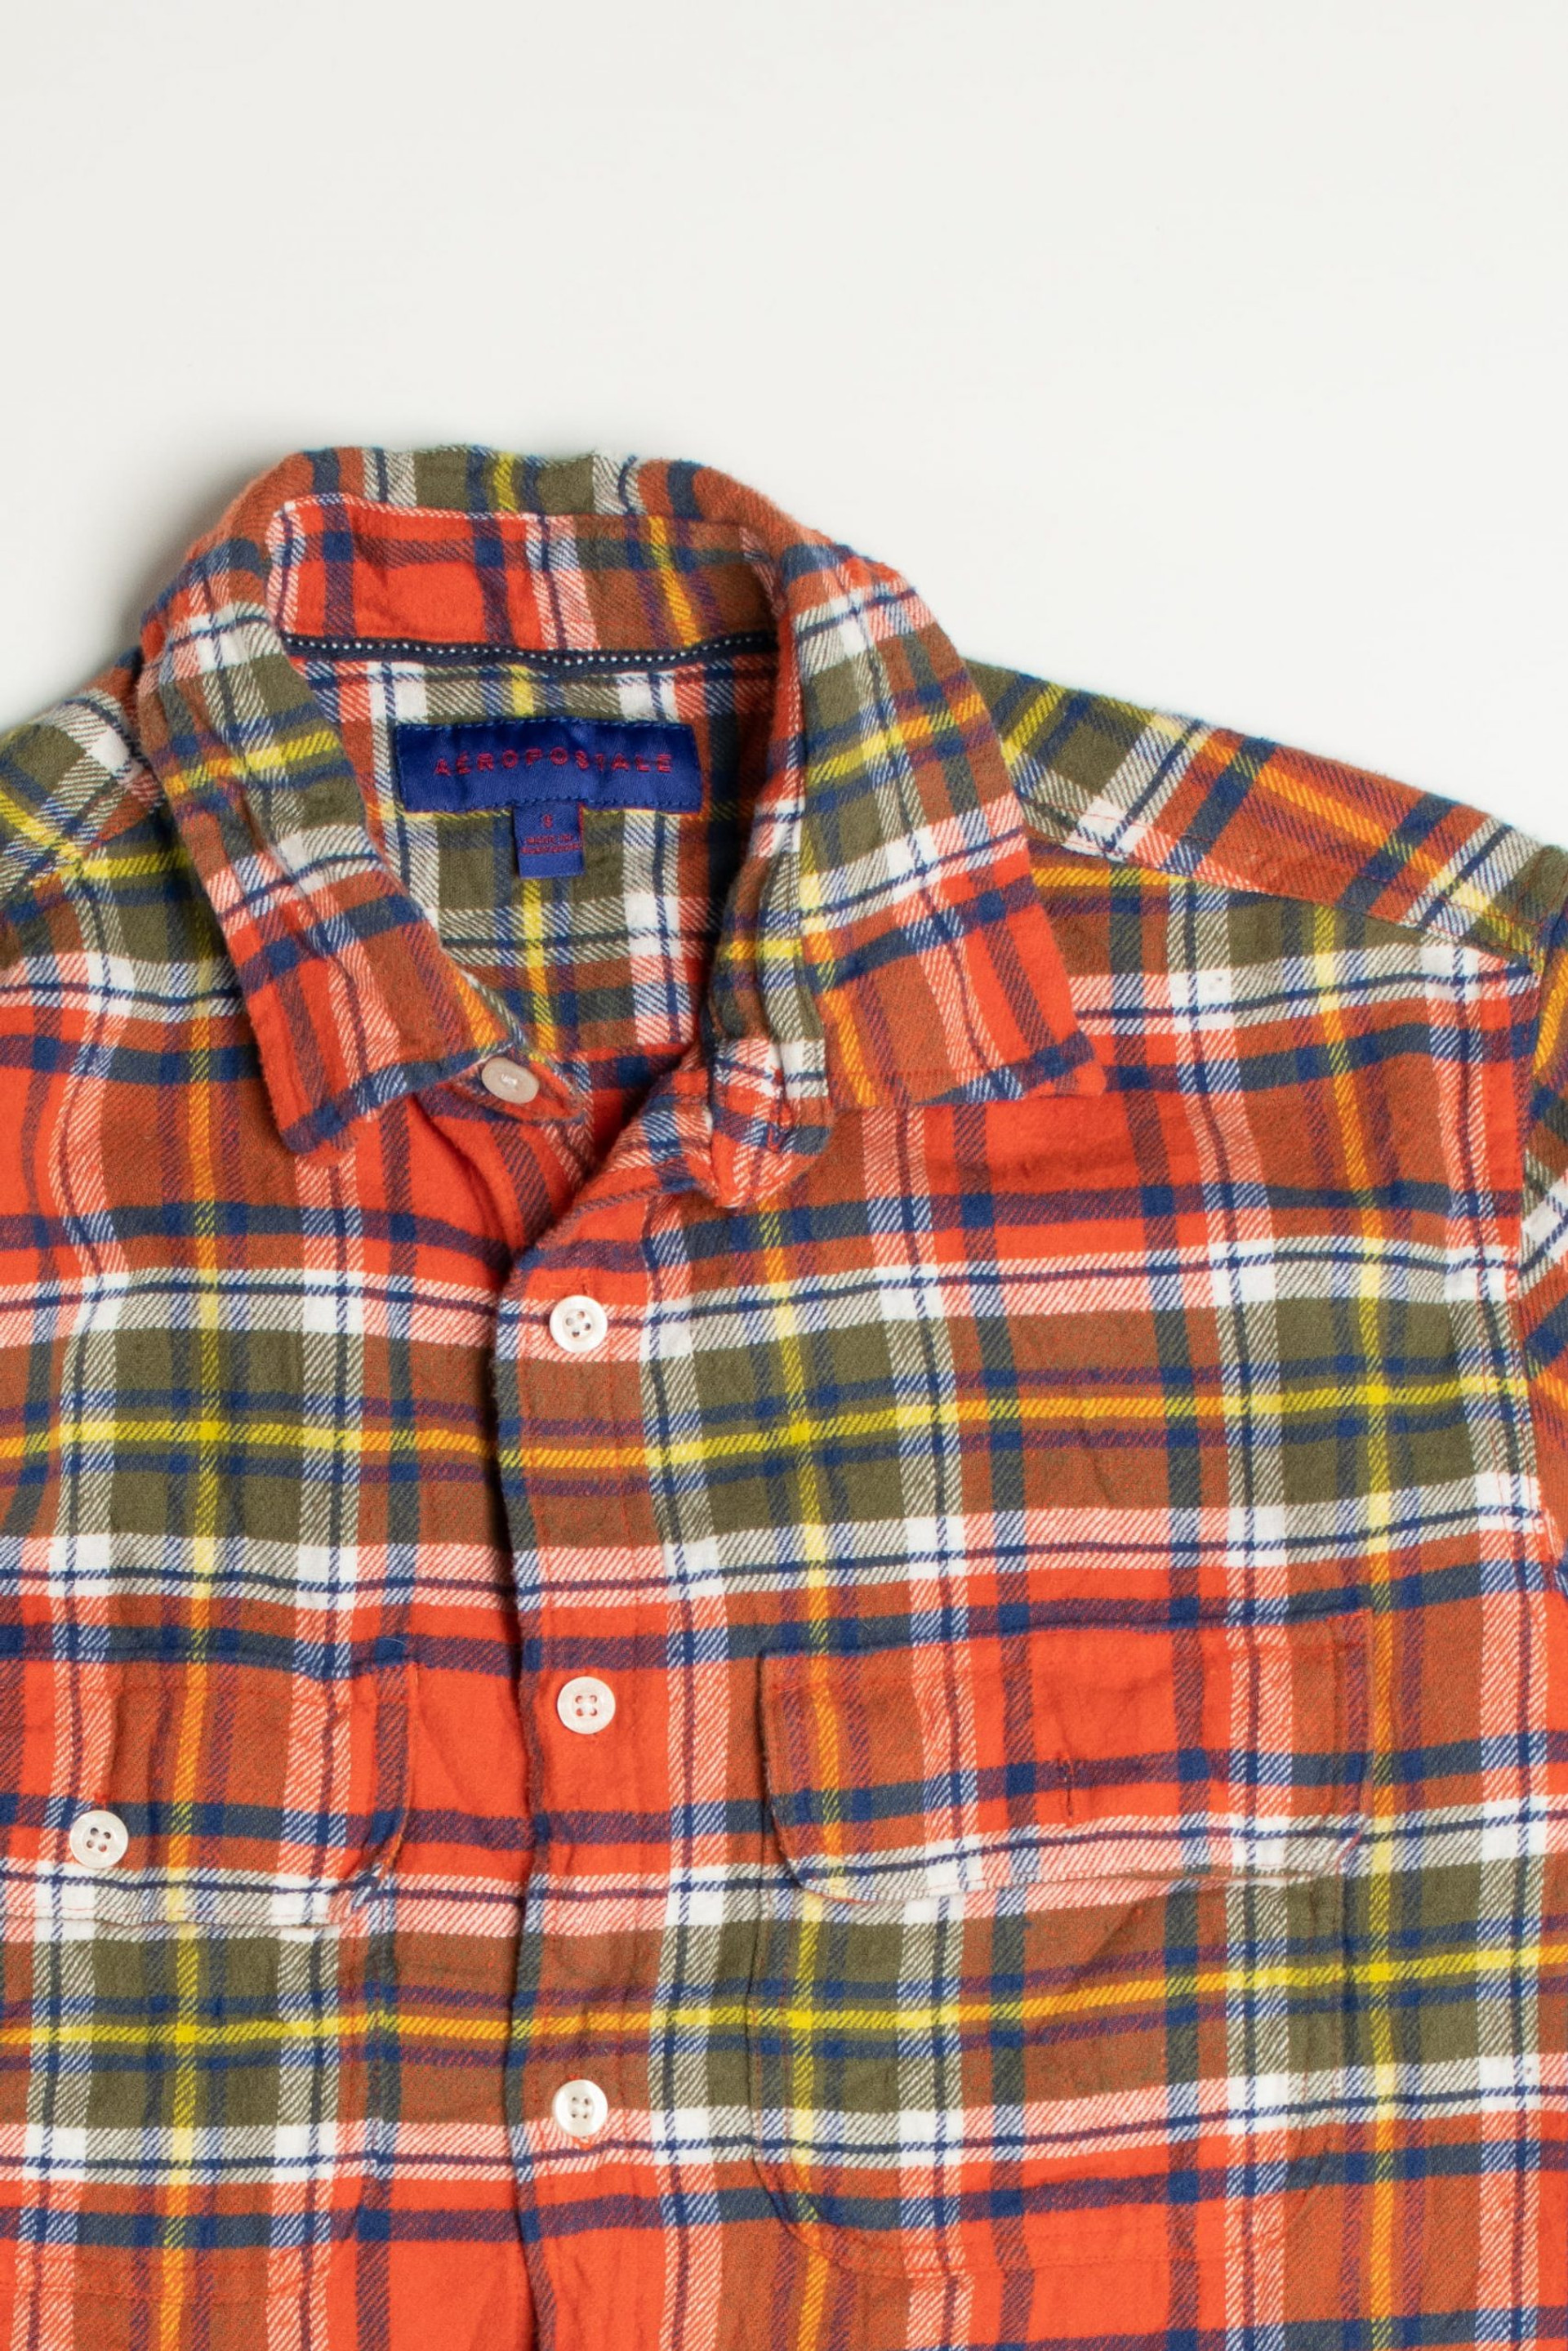 Aeropostale Flannel Shirt (2000s) - Ragstock.com